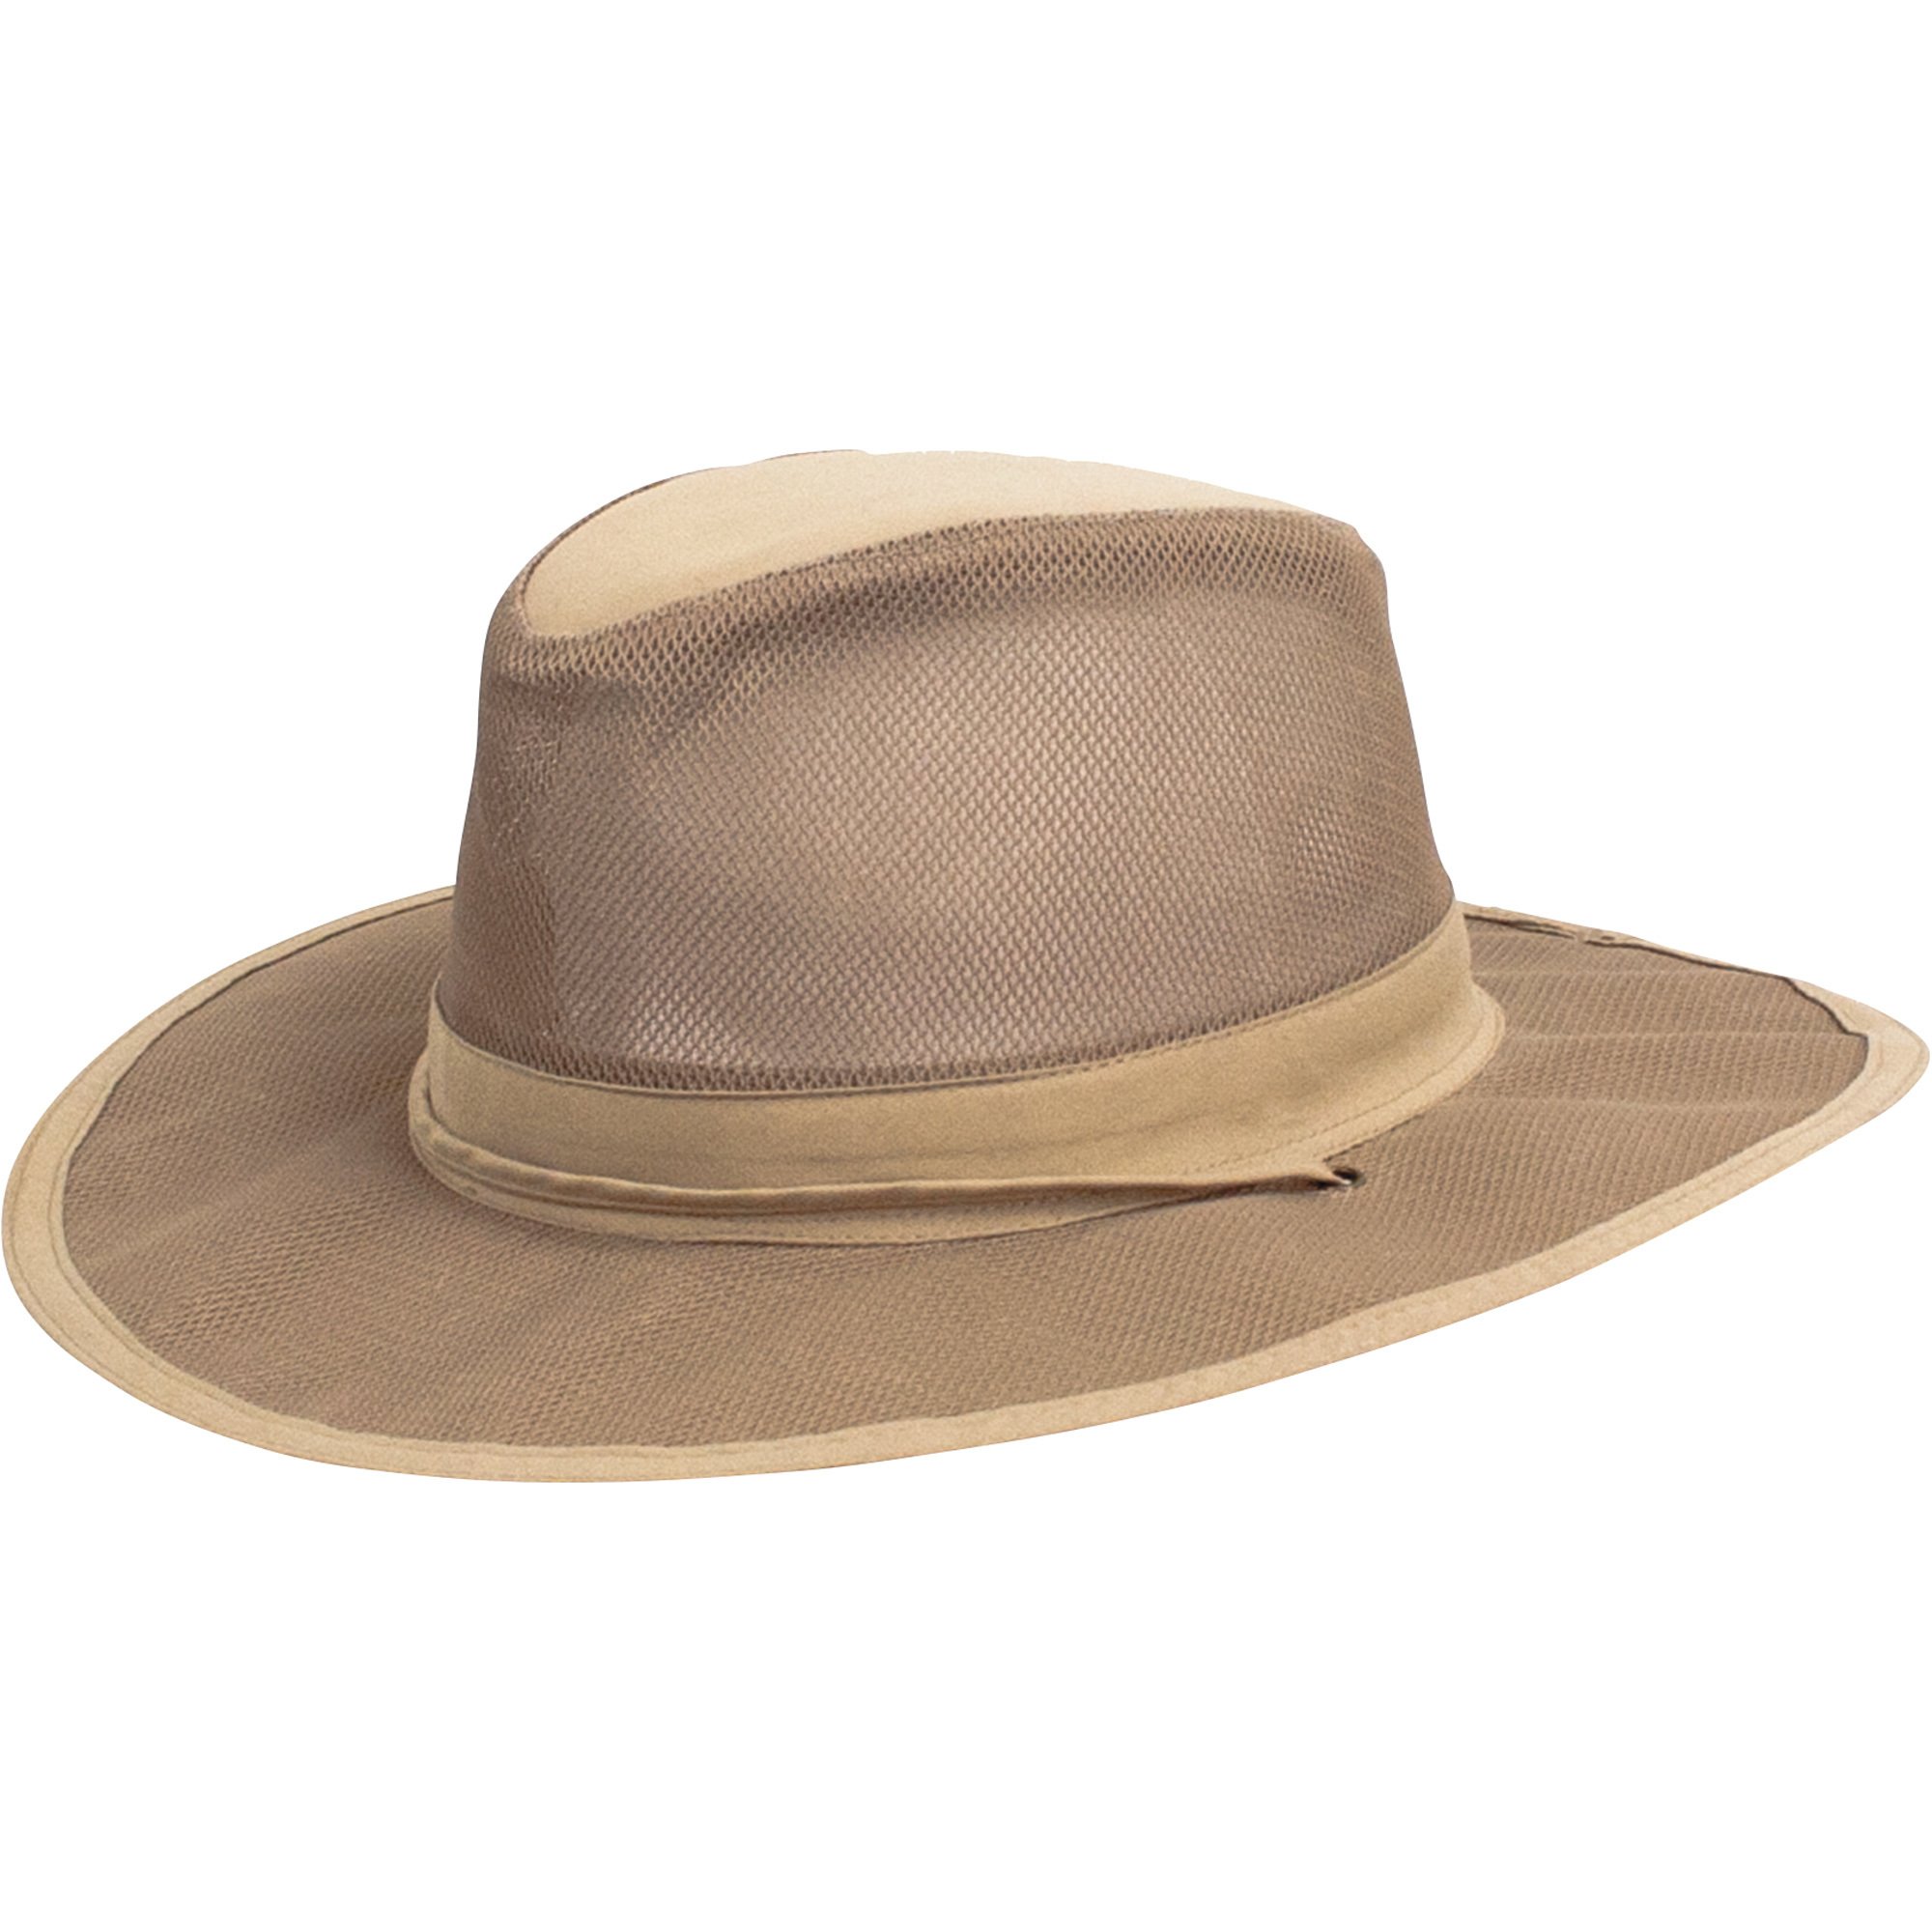 Peter Grimm David Men's Outdoor Hat — Tan, One Size Fits Most, Model#  GCR1497-TAN-O